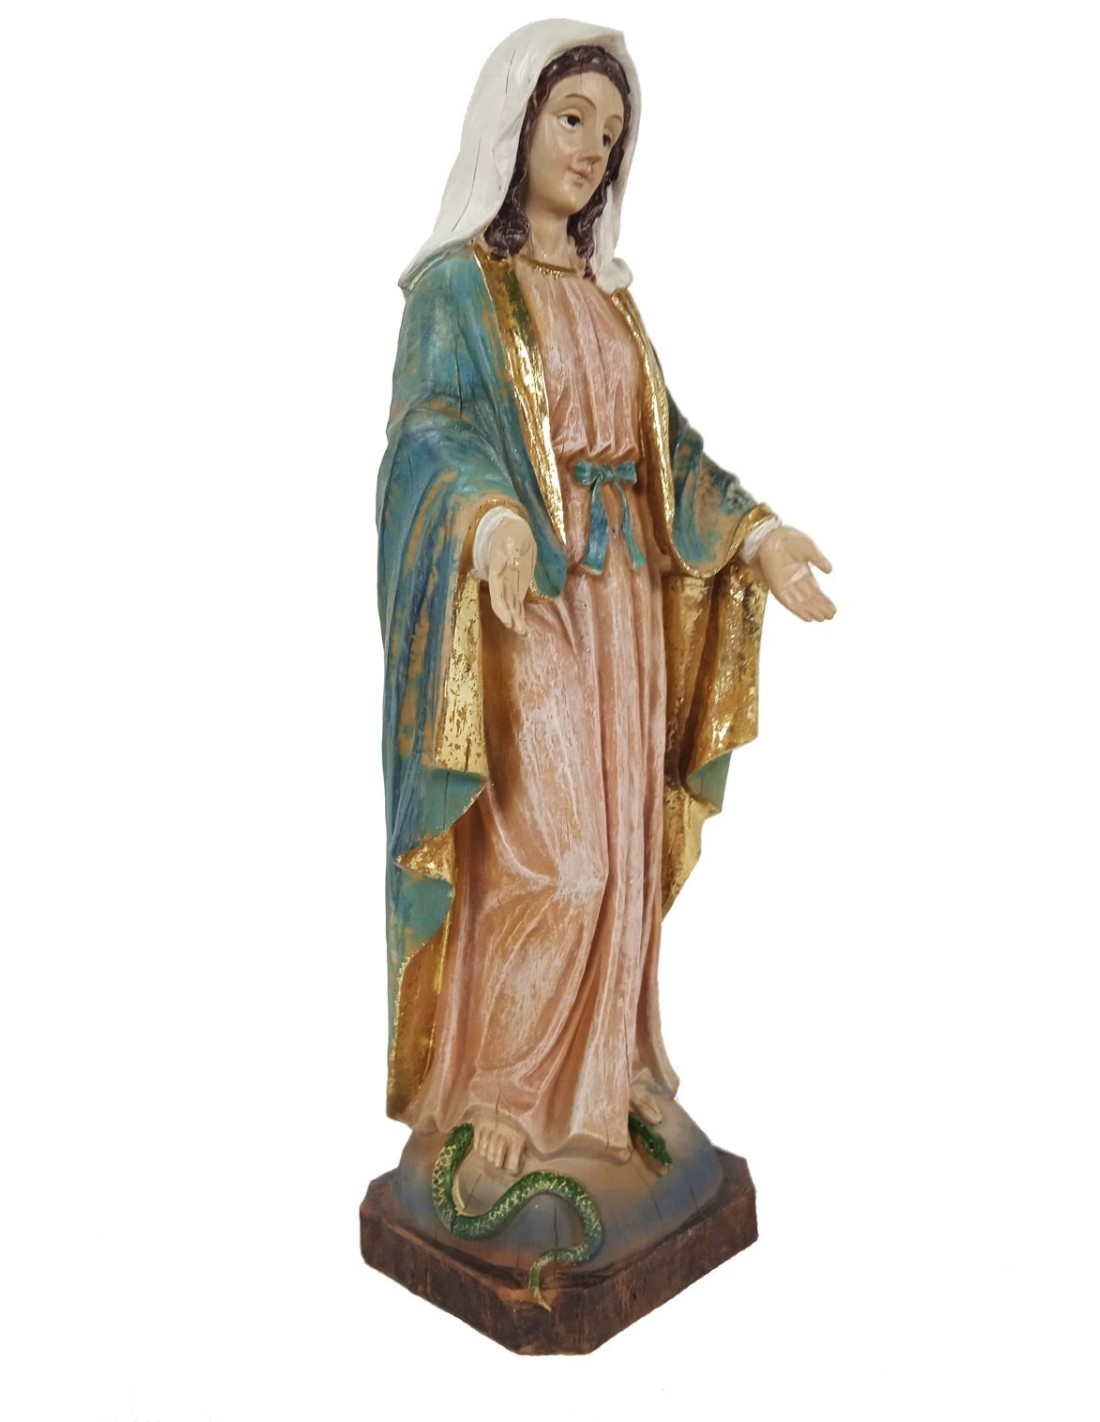 Estatua figura religiosa Virgen Milagrosa escultura imitación de madera vieja decoración hogar